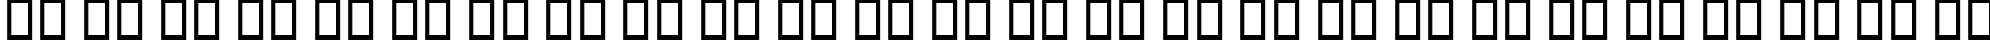 Пример написания английского алфавита шрифтом B Sara